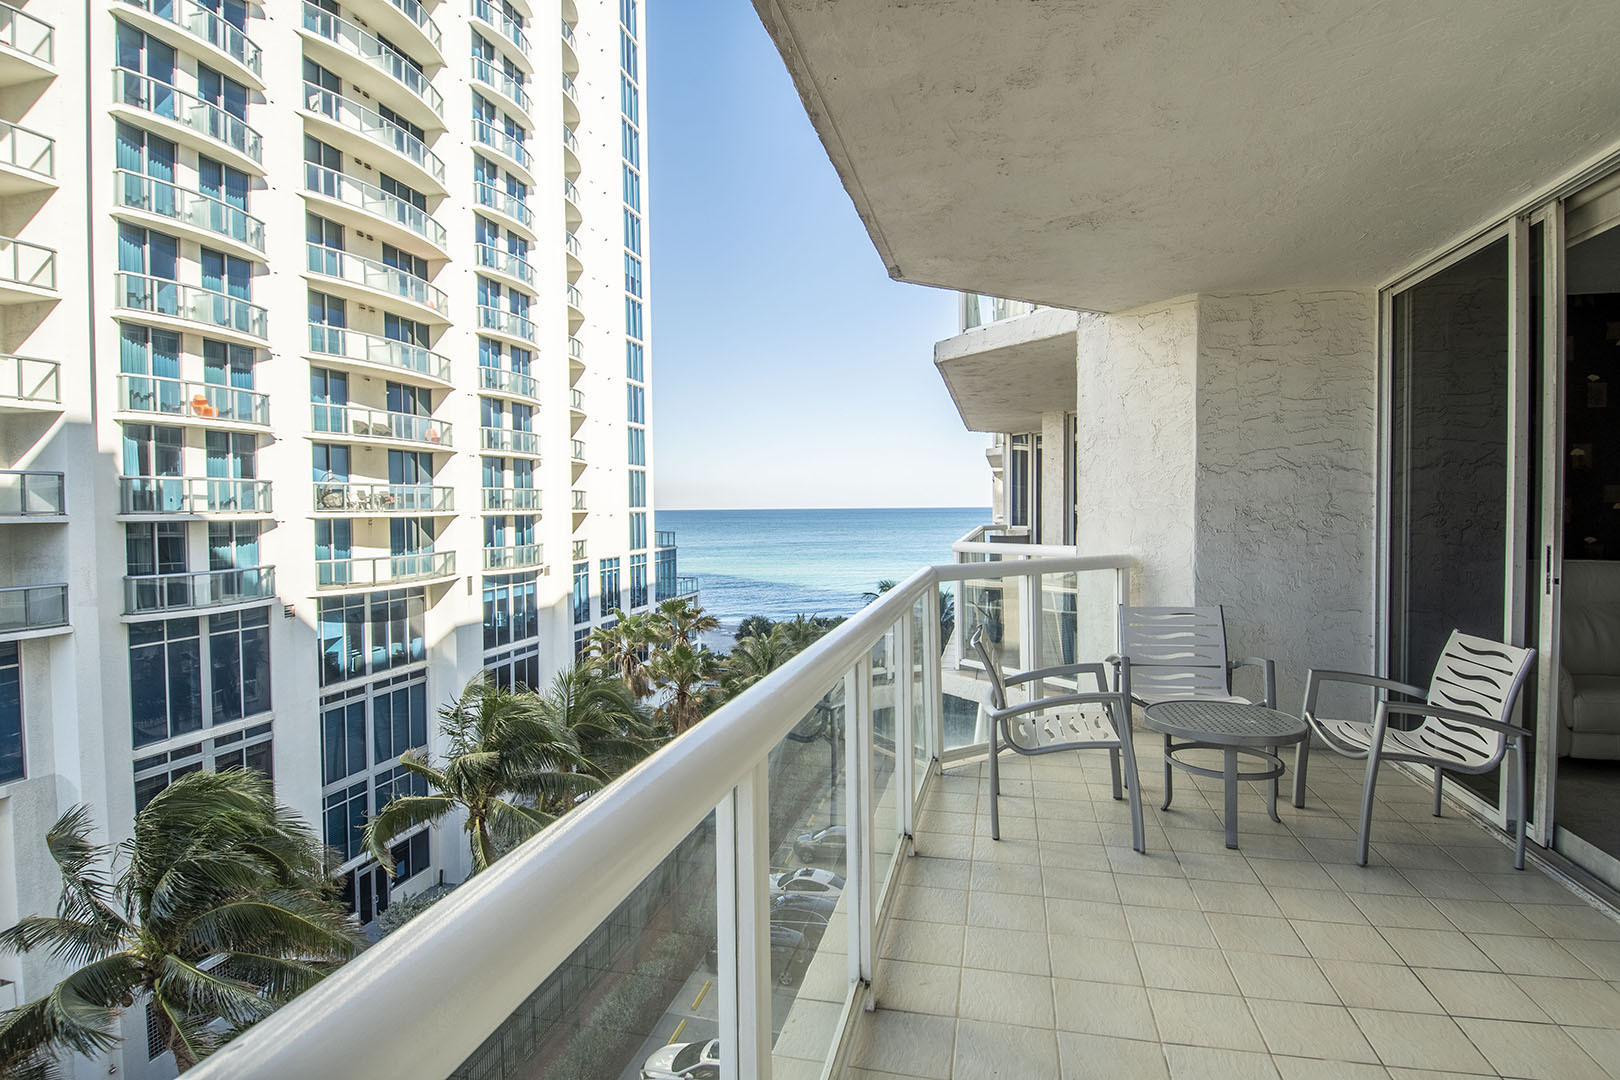 Balcony & View - 17275 Collins Avenue, Unit 712, Sunny Isles Beach, FL 33160 - © Flat Fee Florida Realty